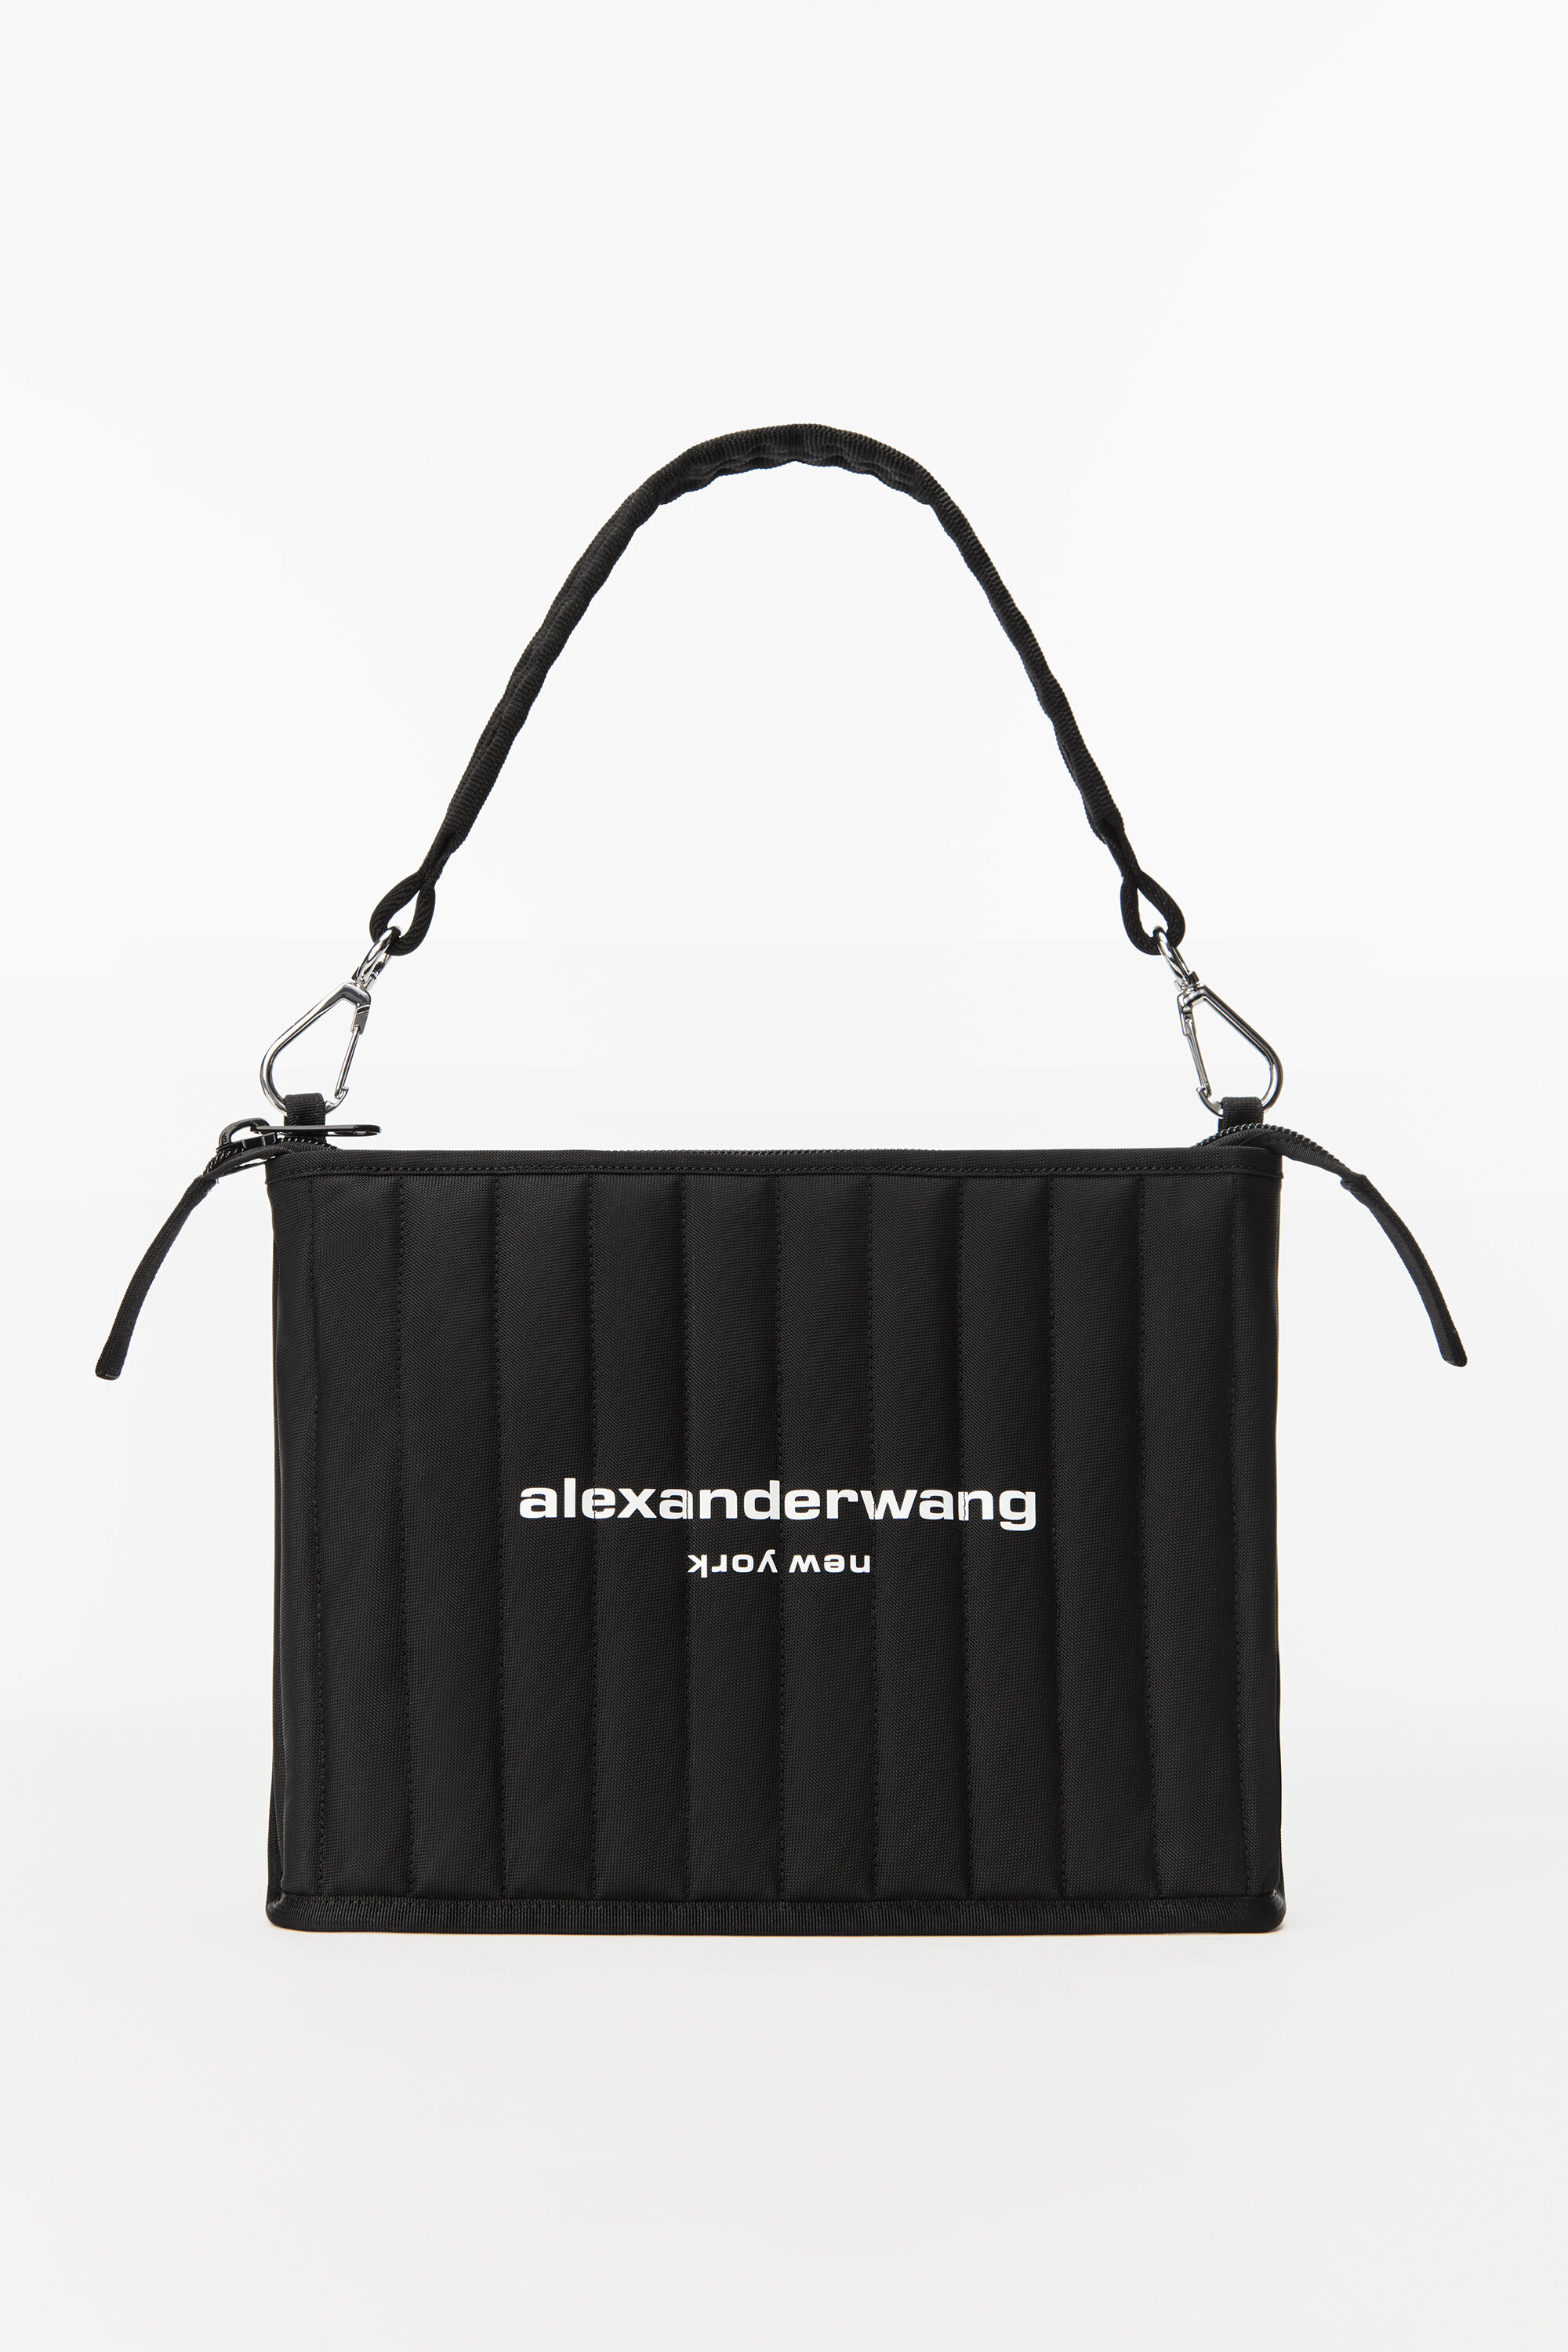 Alexander wang bag - ハンドバッグ